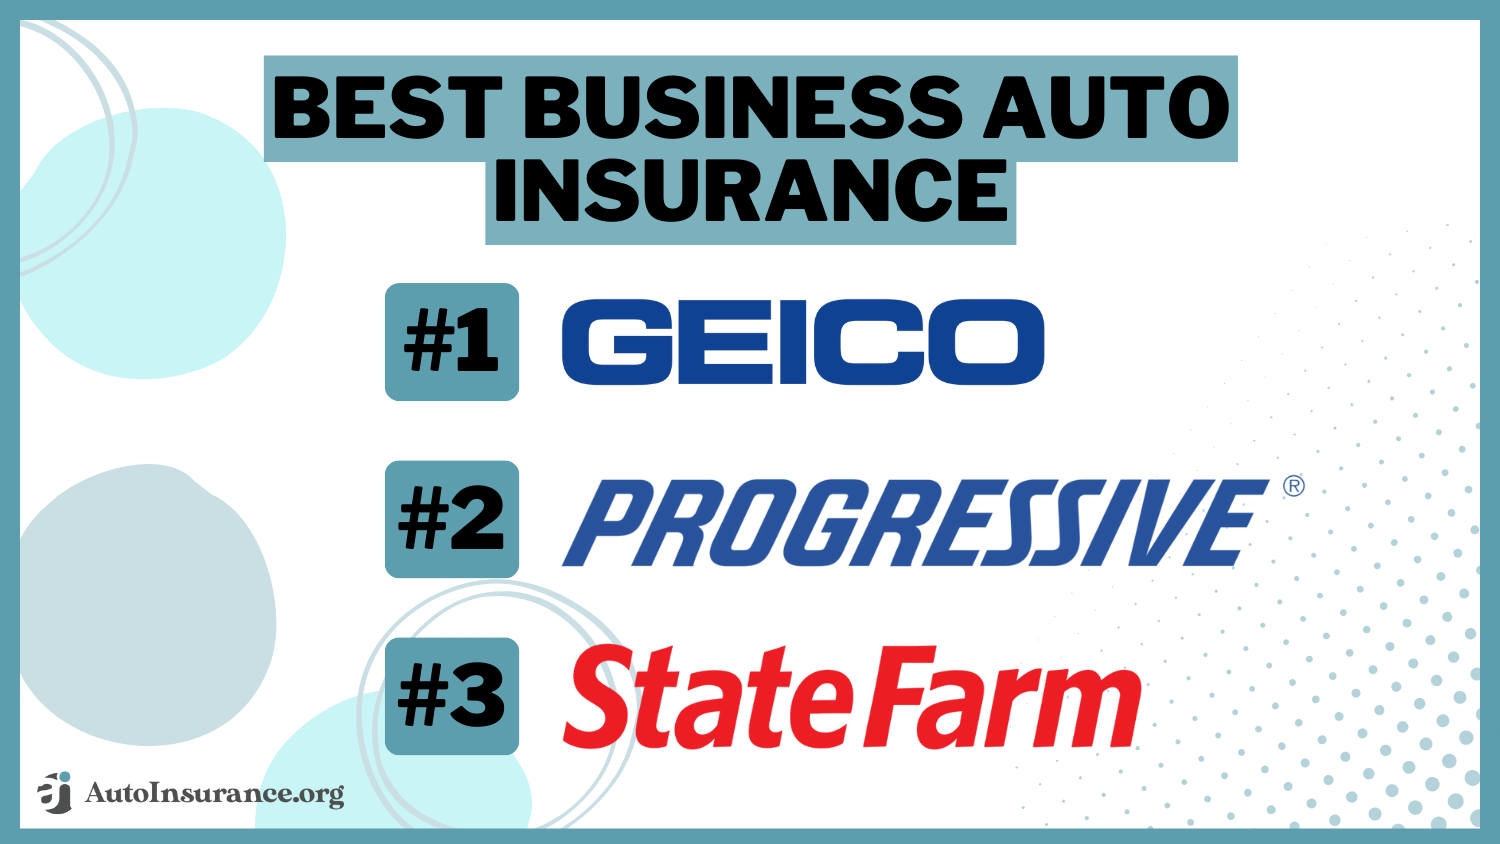 Best Business Auto Insurance: Geico, Progressive, State Farm